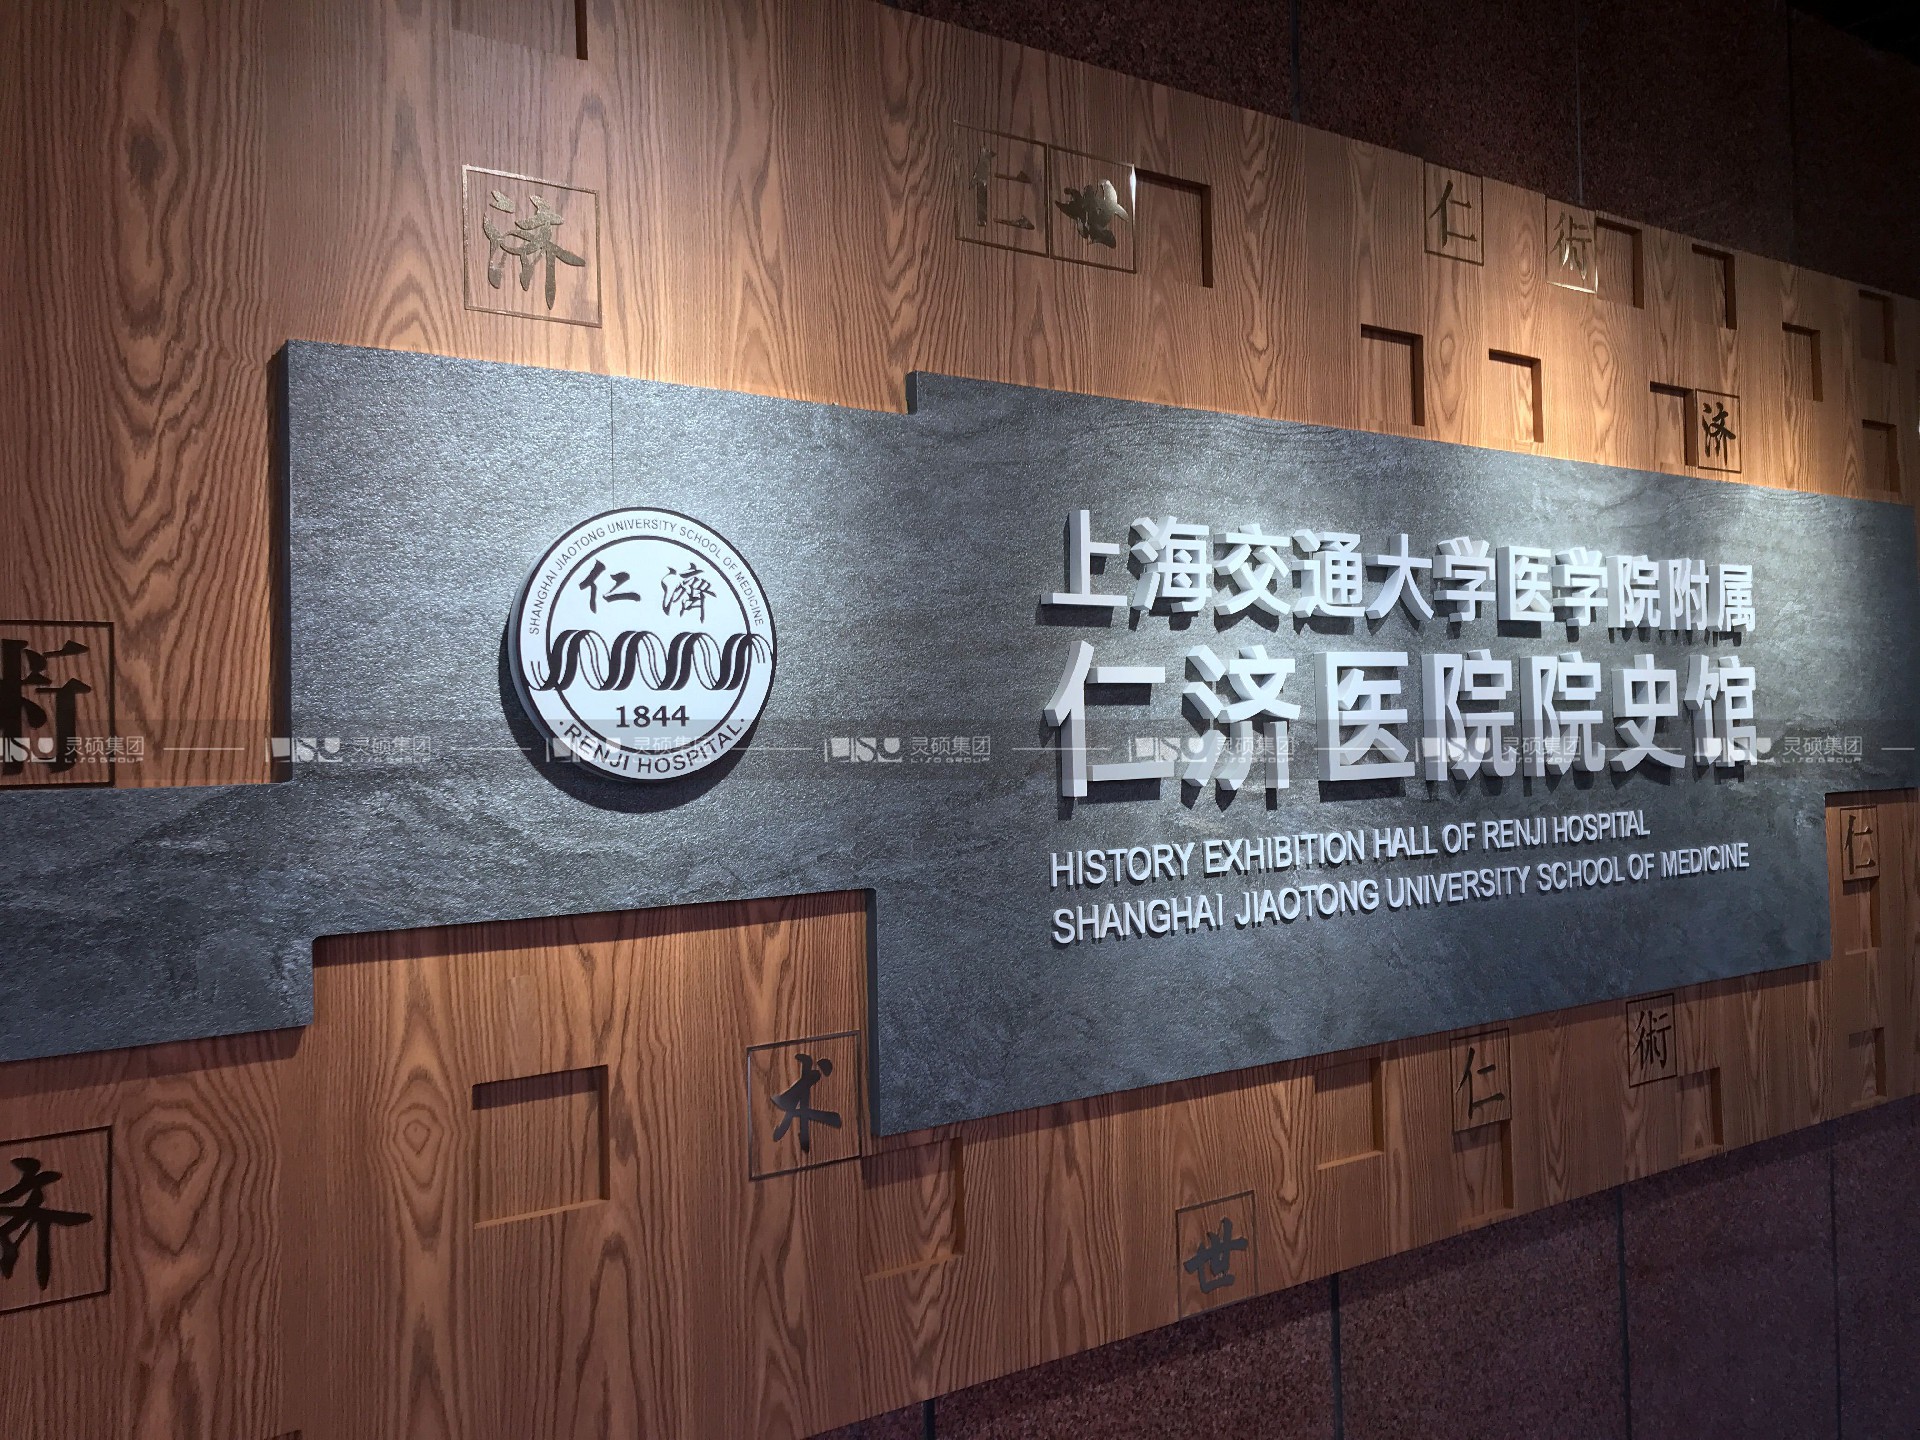 The History Museum of Shanghai Renji Hospital open